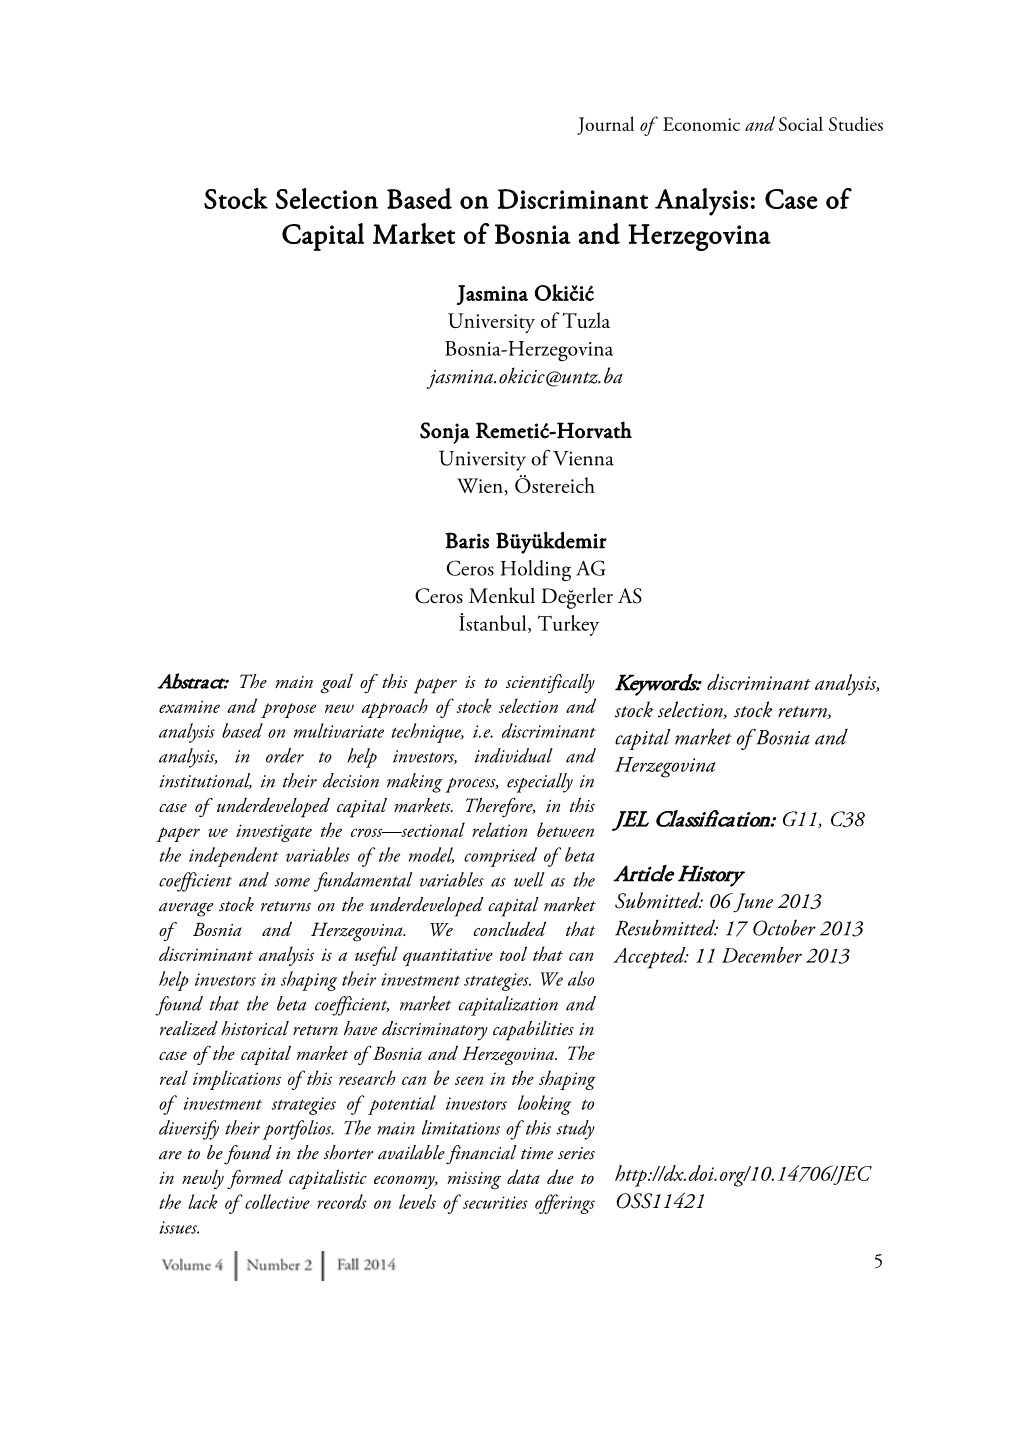 Stock Selection Based on Discriminant Analysis: Case of Capital Market of Bosnia and Herzegovina